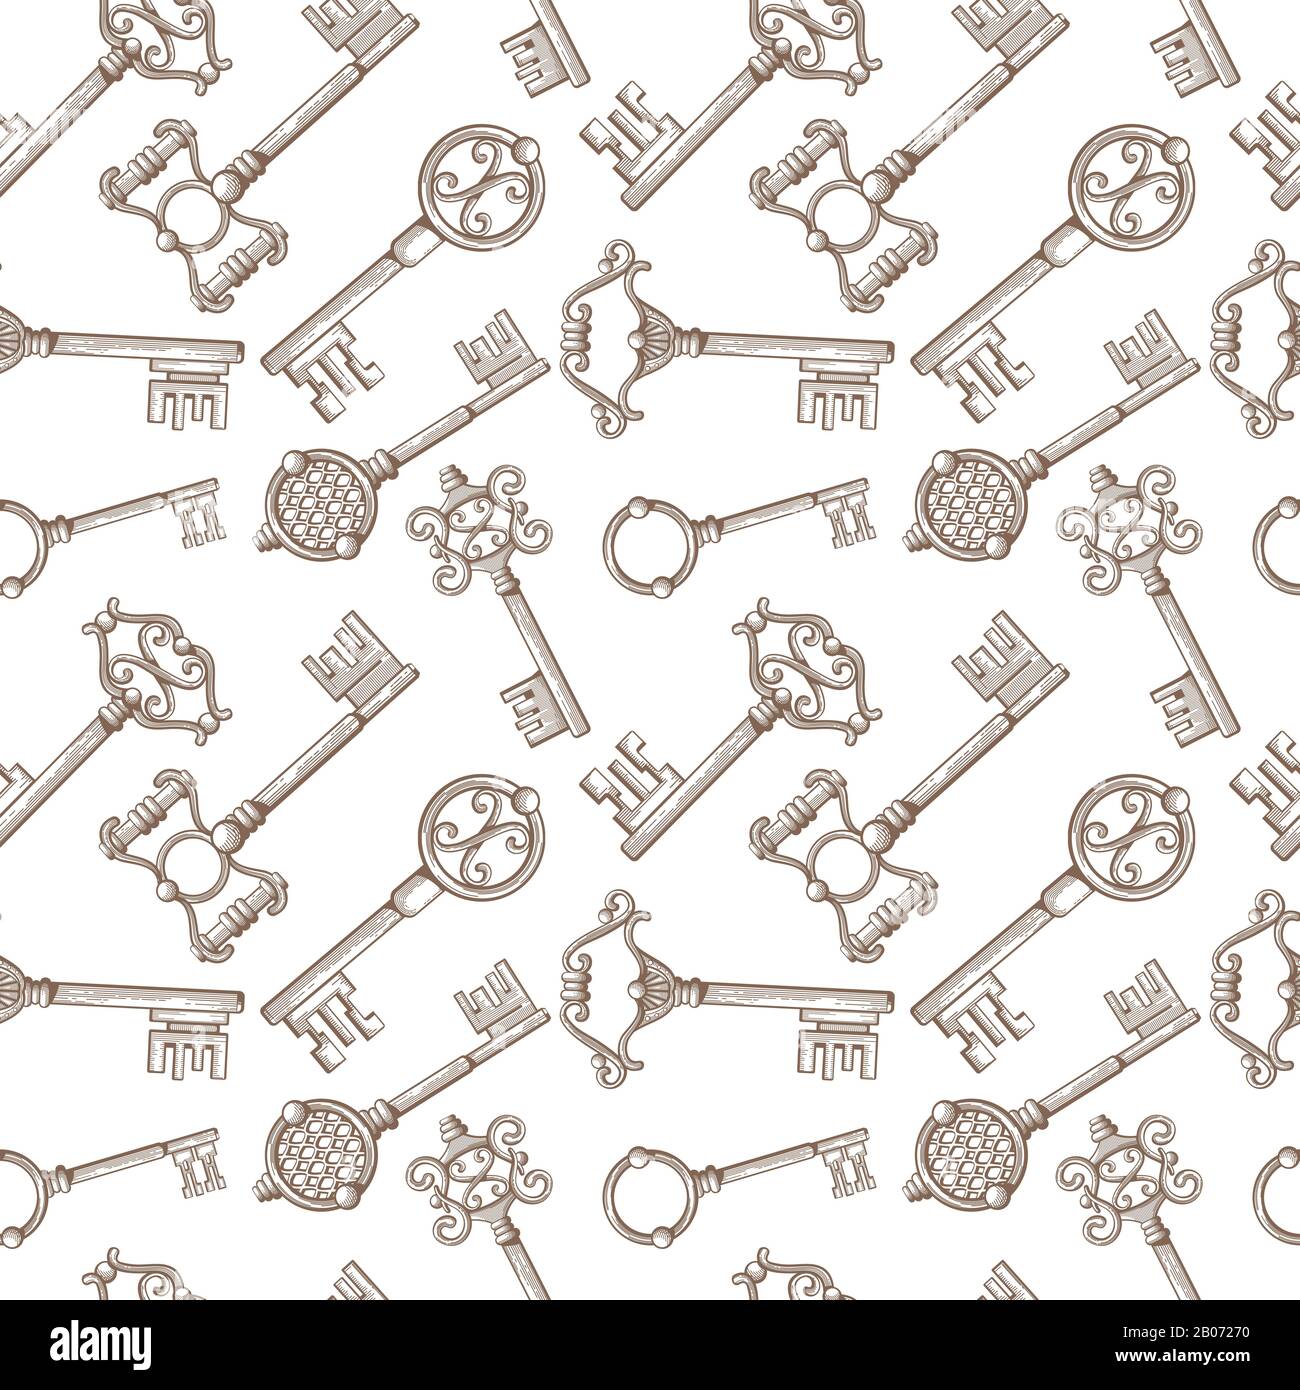 Vintage lock and key for door vector seamless pattern background. Antique and filigree metal keys illustration Stock Vector